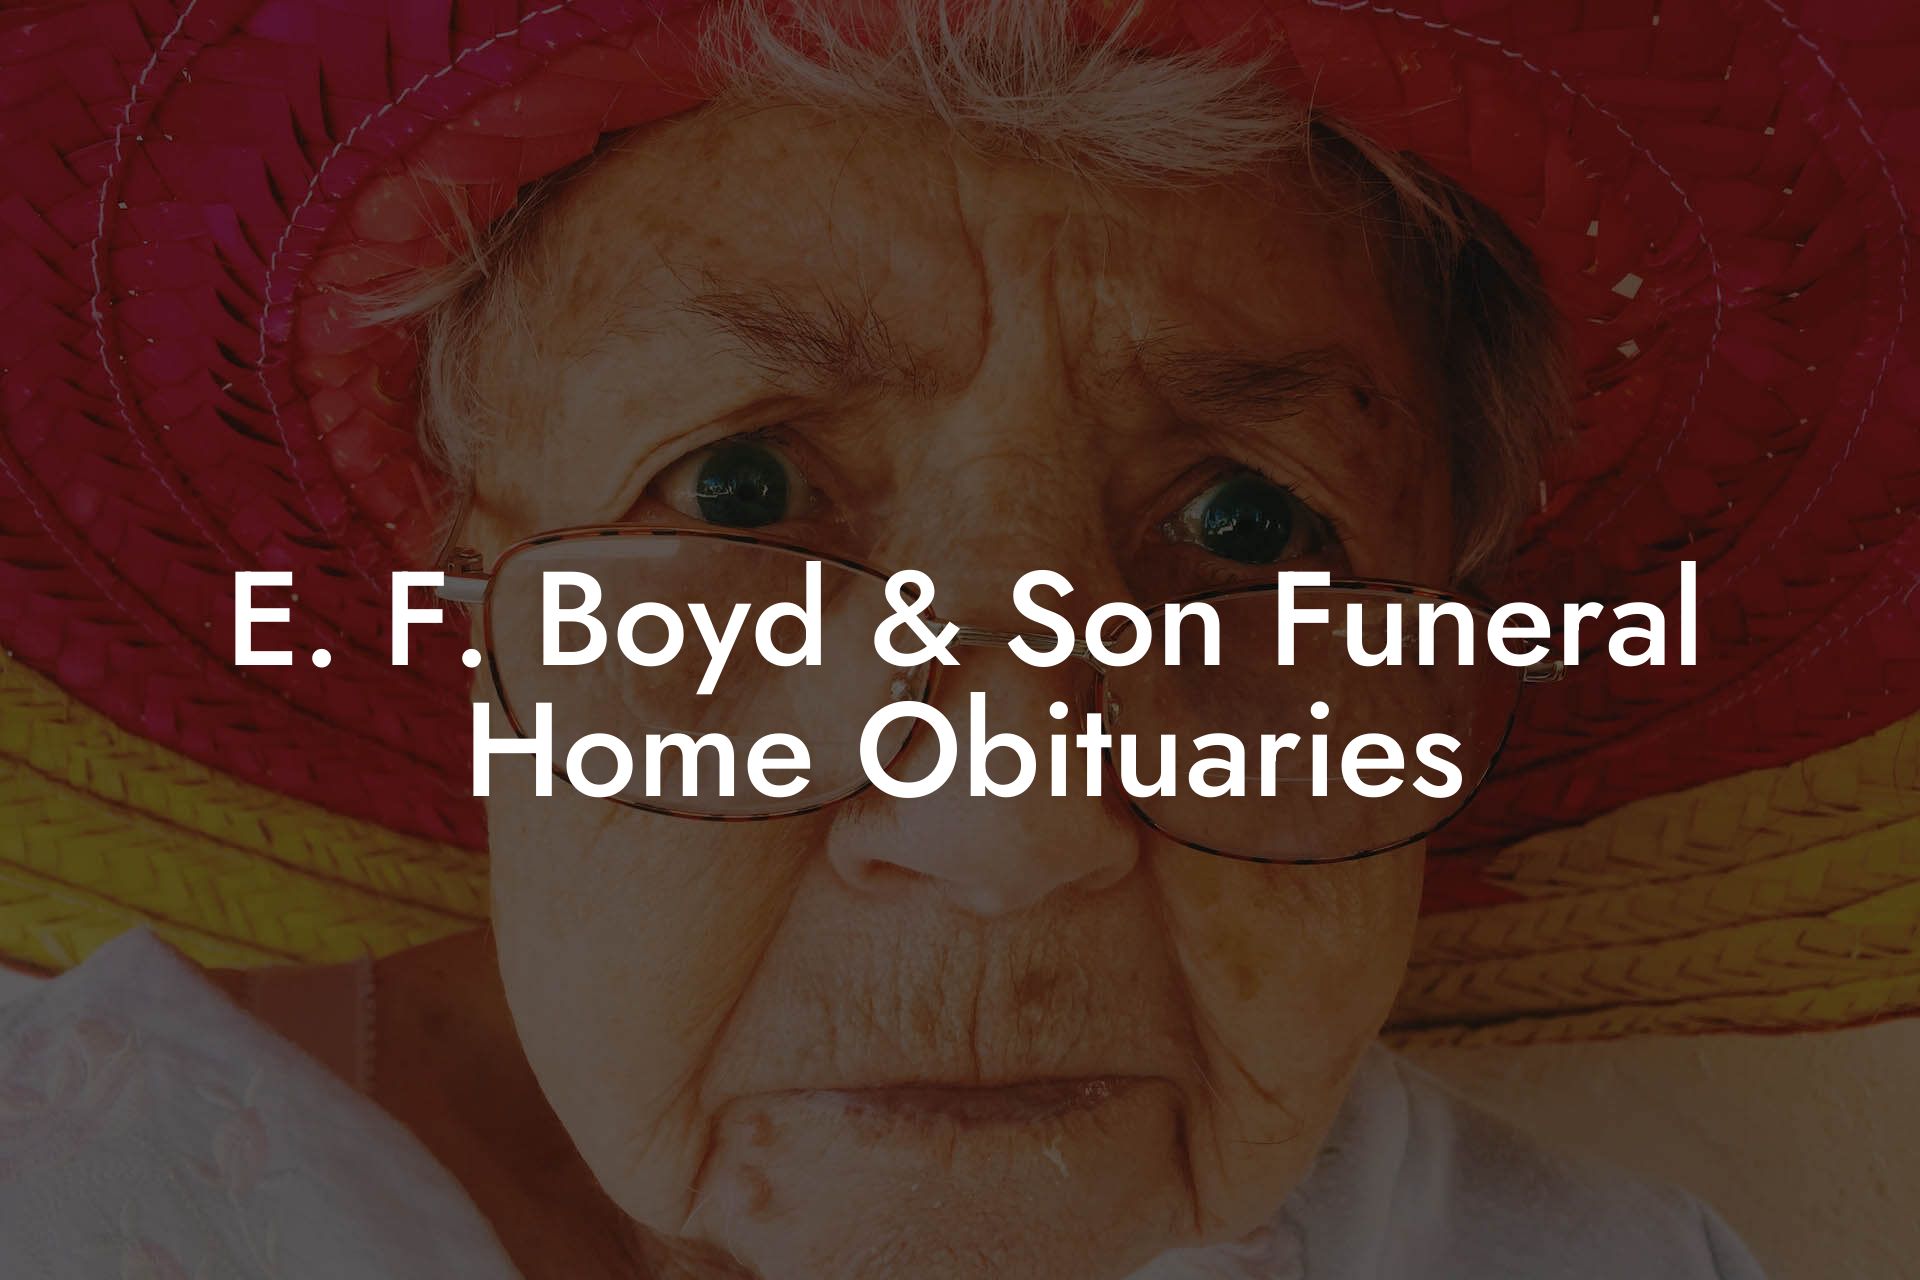 E. F. Boyd & Son Funeral Home Obituaries